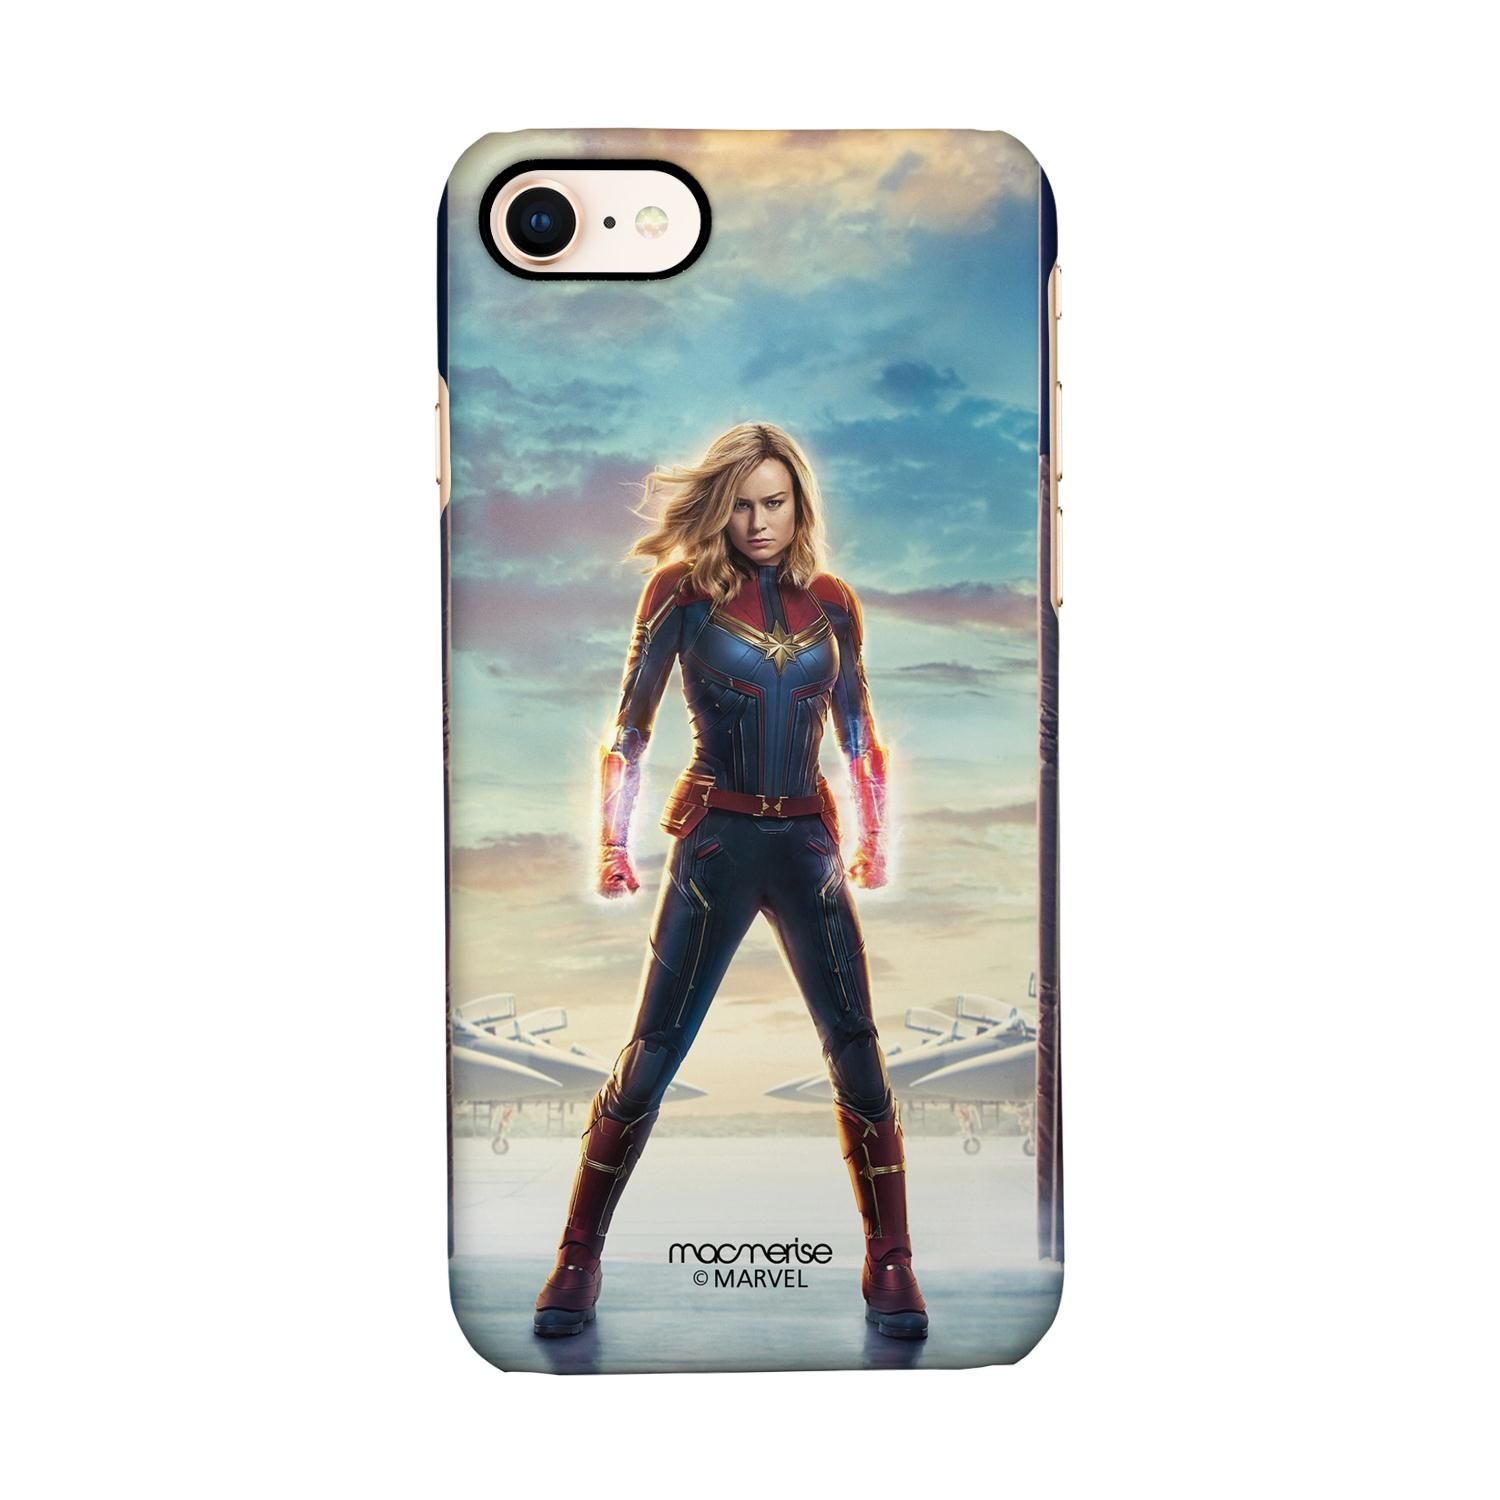 Buy Captain Marvel Poster - Sleek Phone Case for iPhone 7 Online